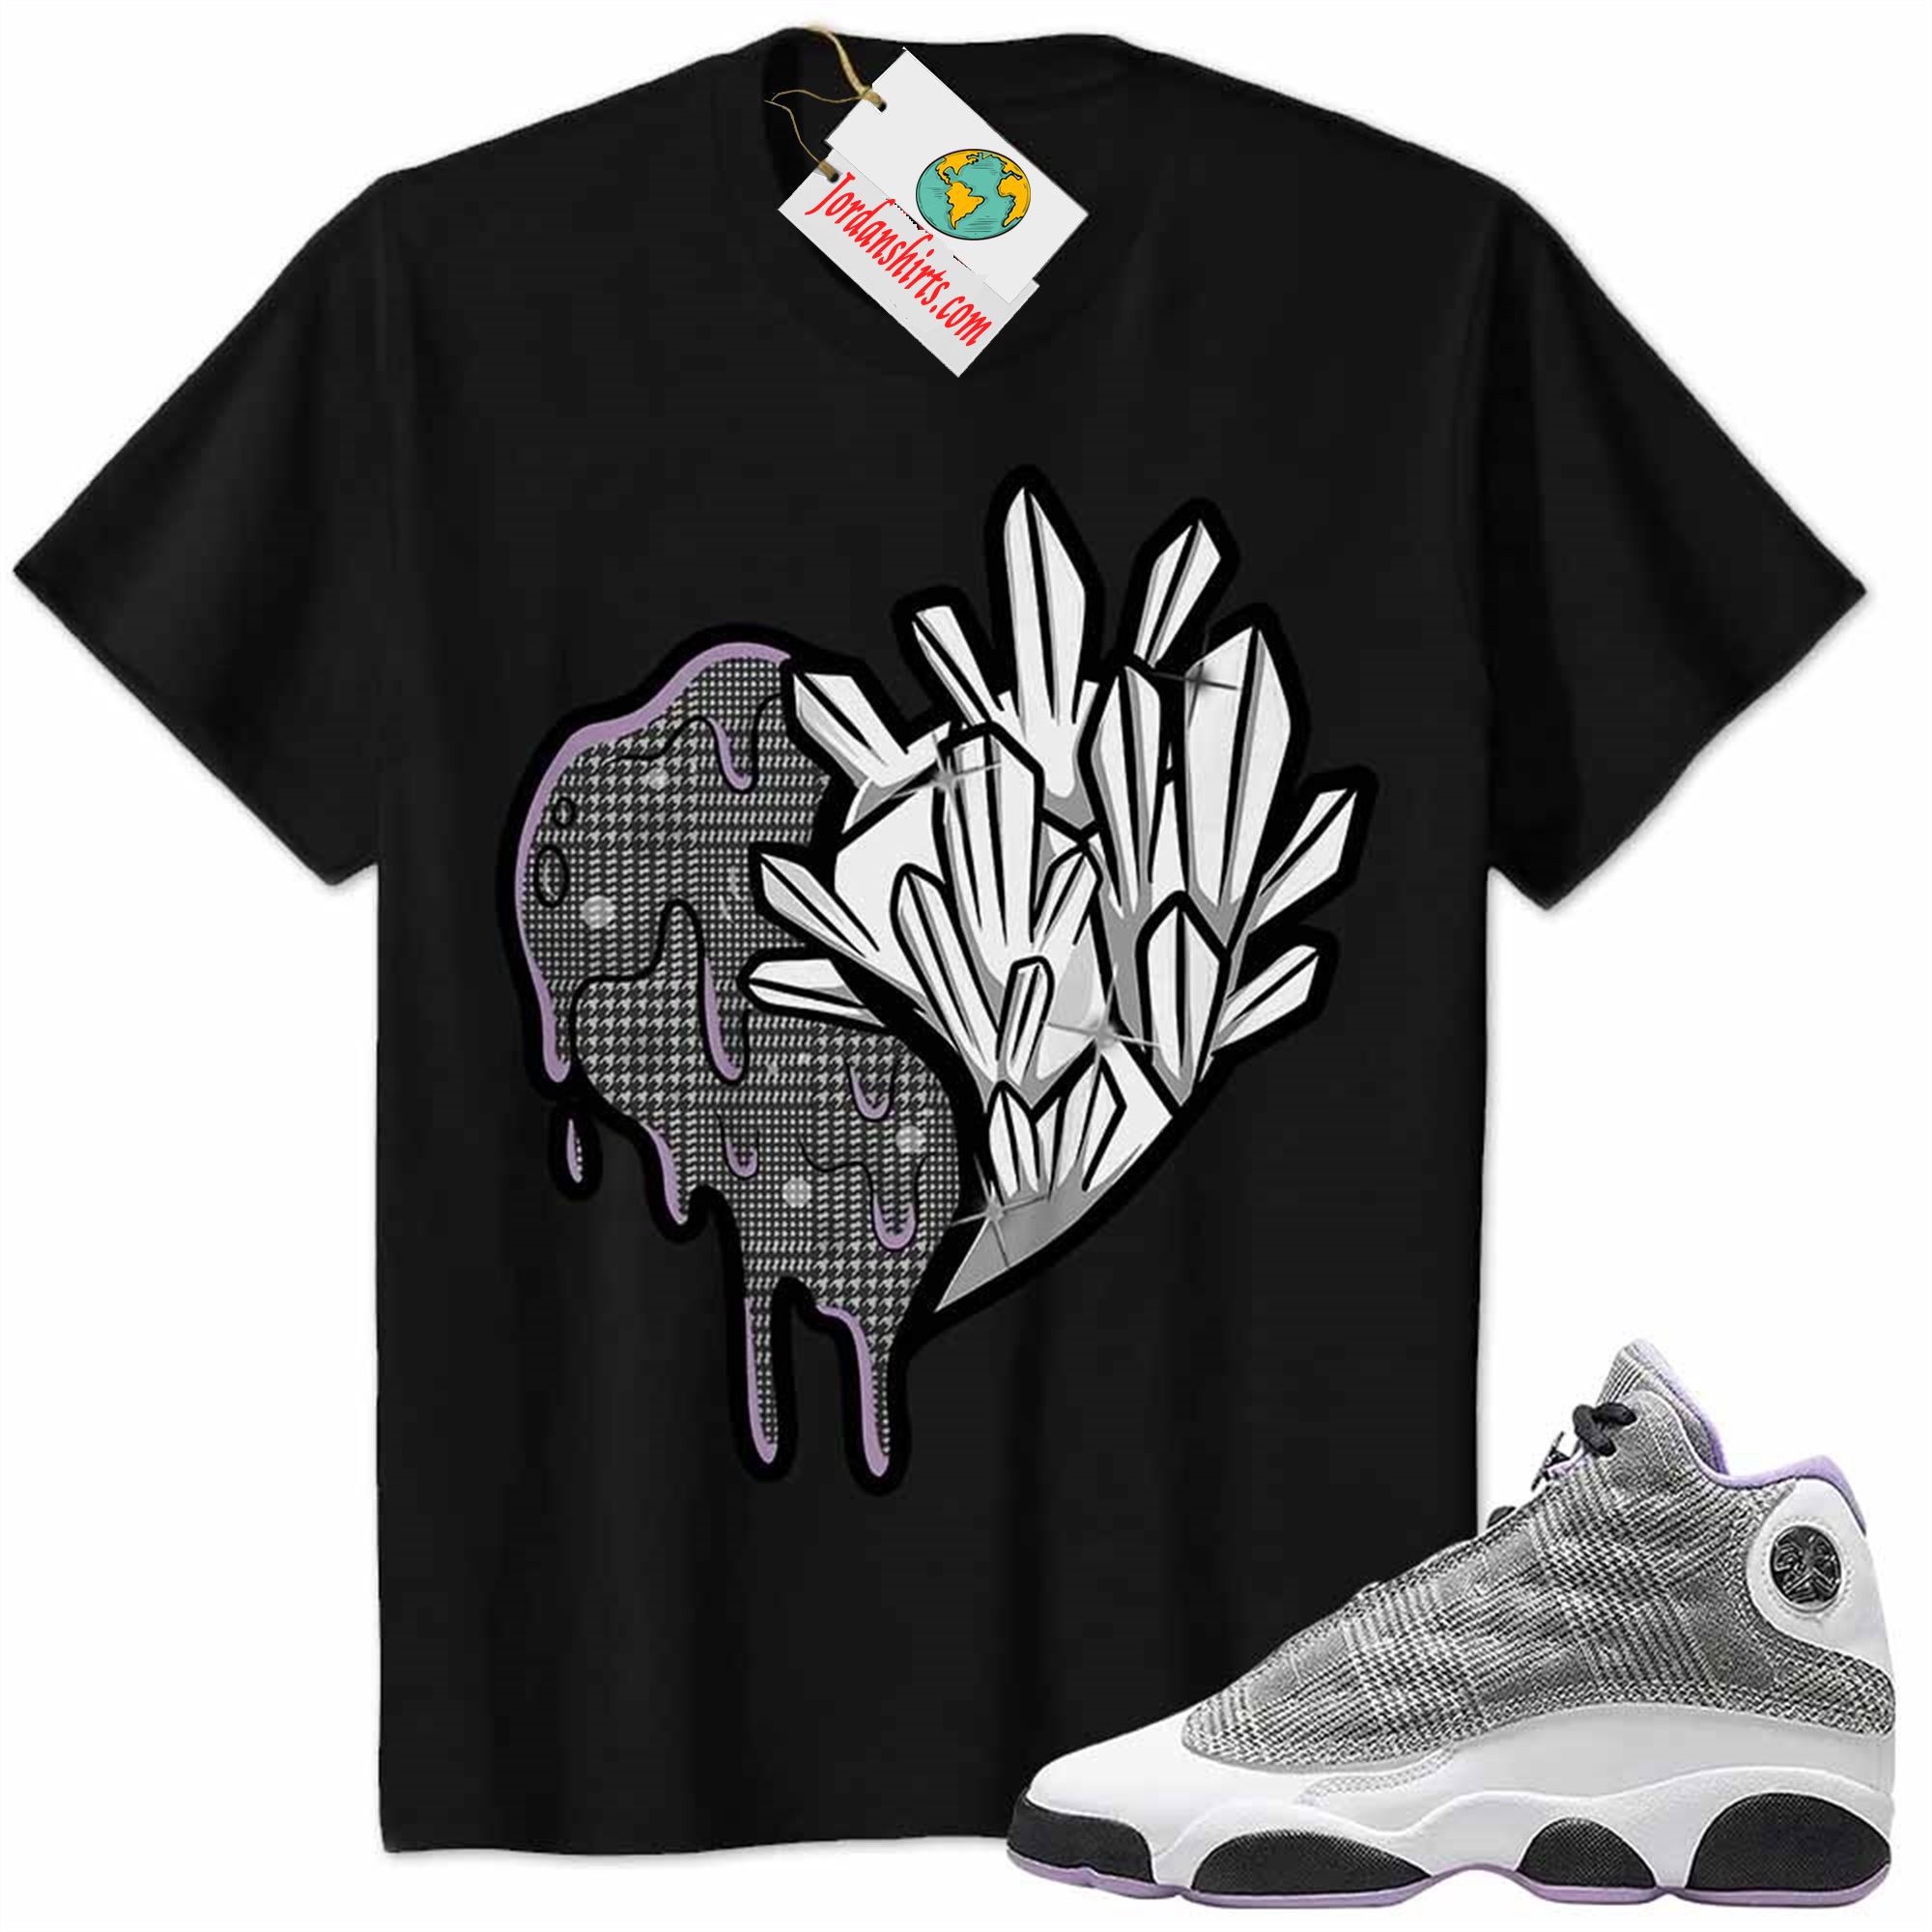 Jordan 13 Shirt, Crystal And Melt Heart Black Air Jordan 13 Houndstooth 13s Full Size Up To 5xl